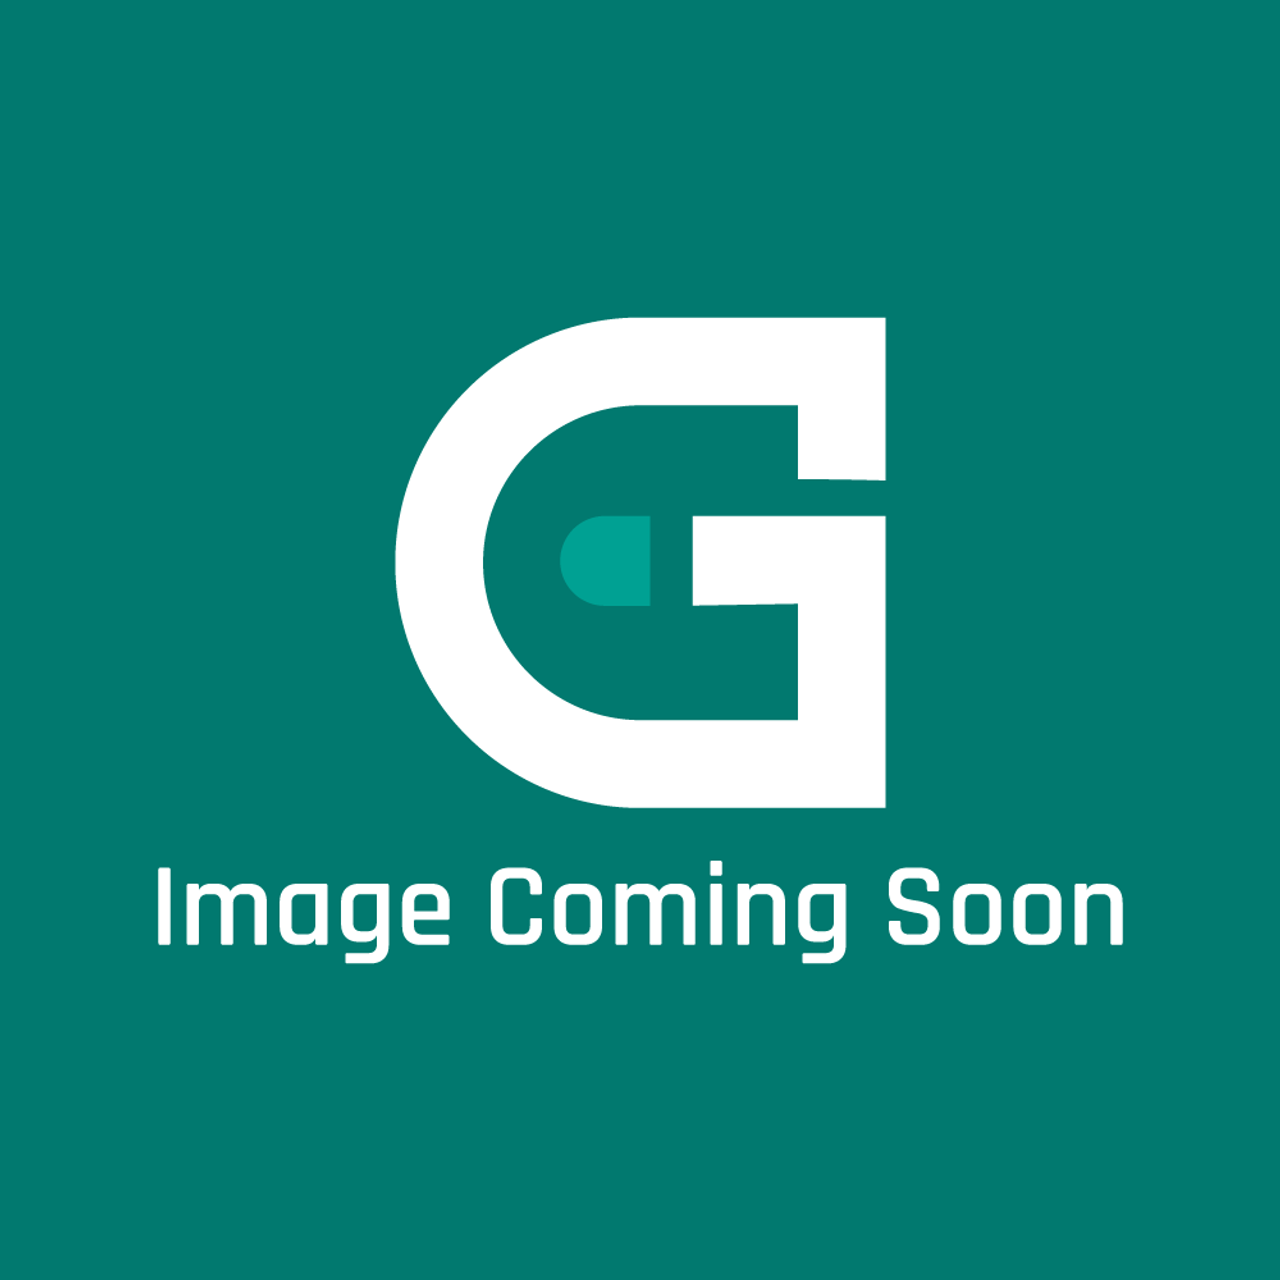 AGA Marvel WSQ00168 - Donard/Brandon Base Plate (Q00168Bxxd) - Image Coming Soon!